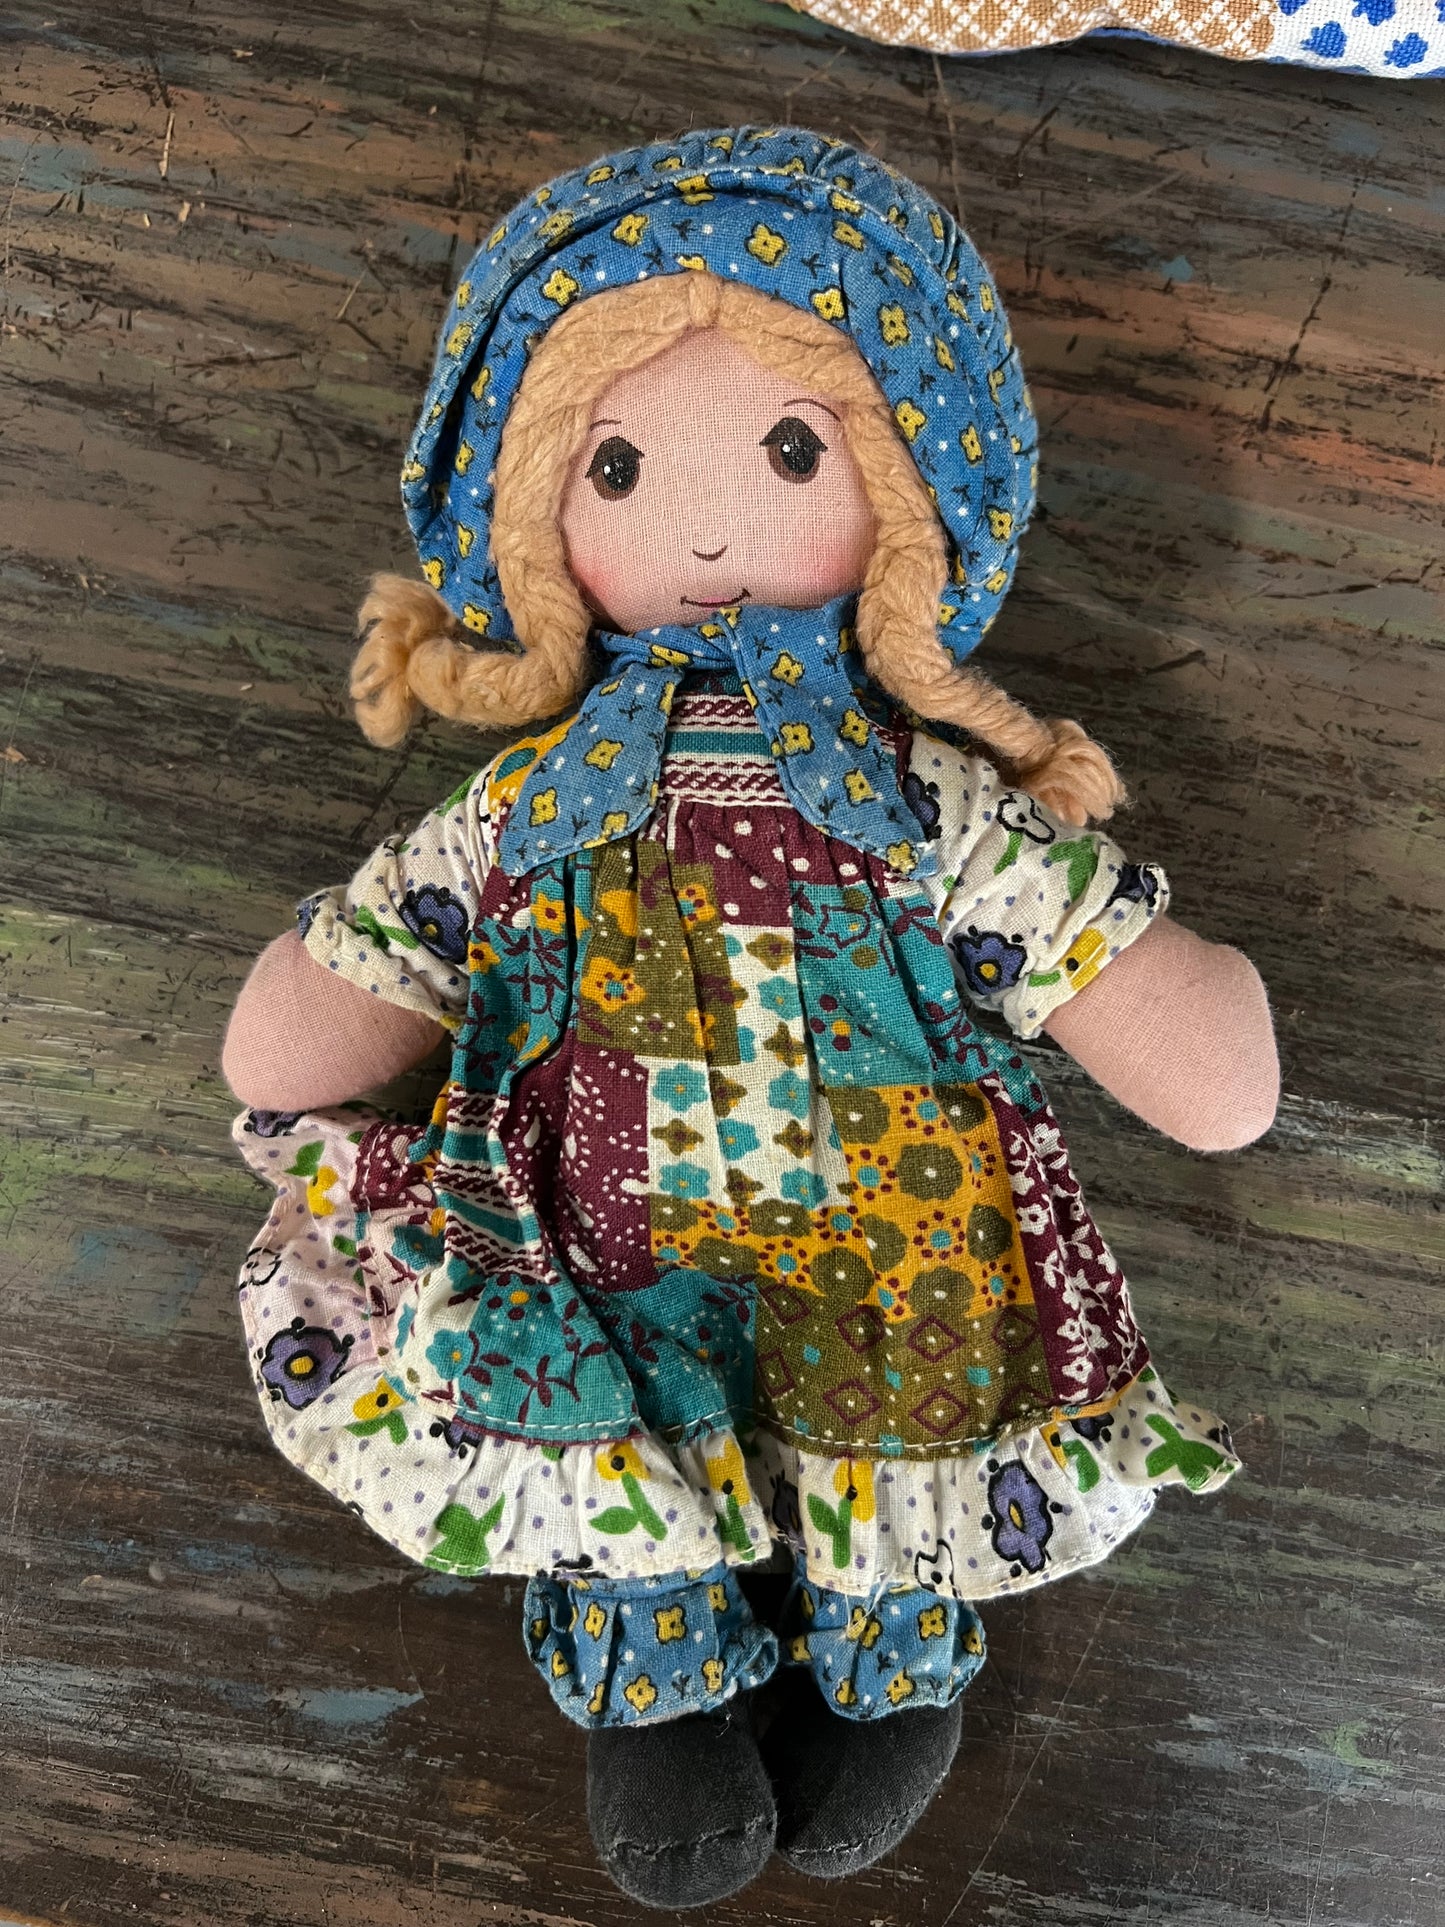 Vintage Knickerbocker Brand Holly Hobby Purse with Doll 1970's Original